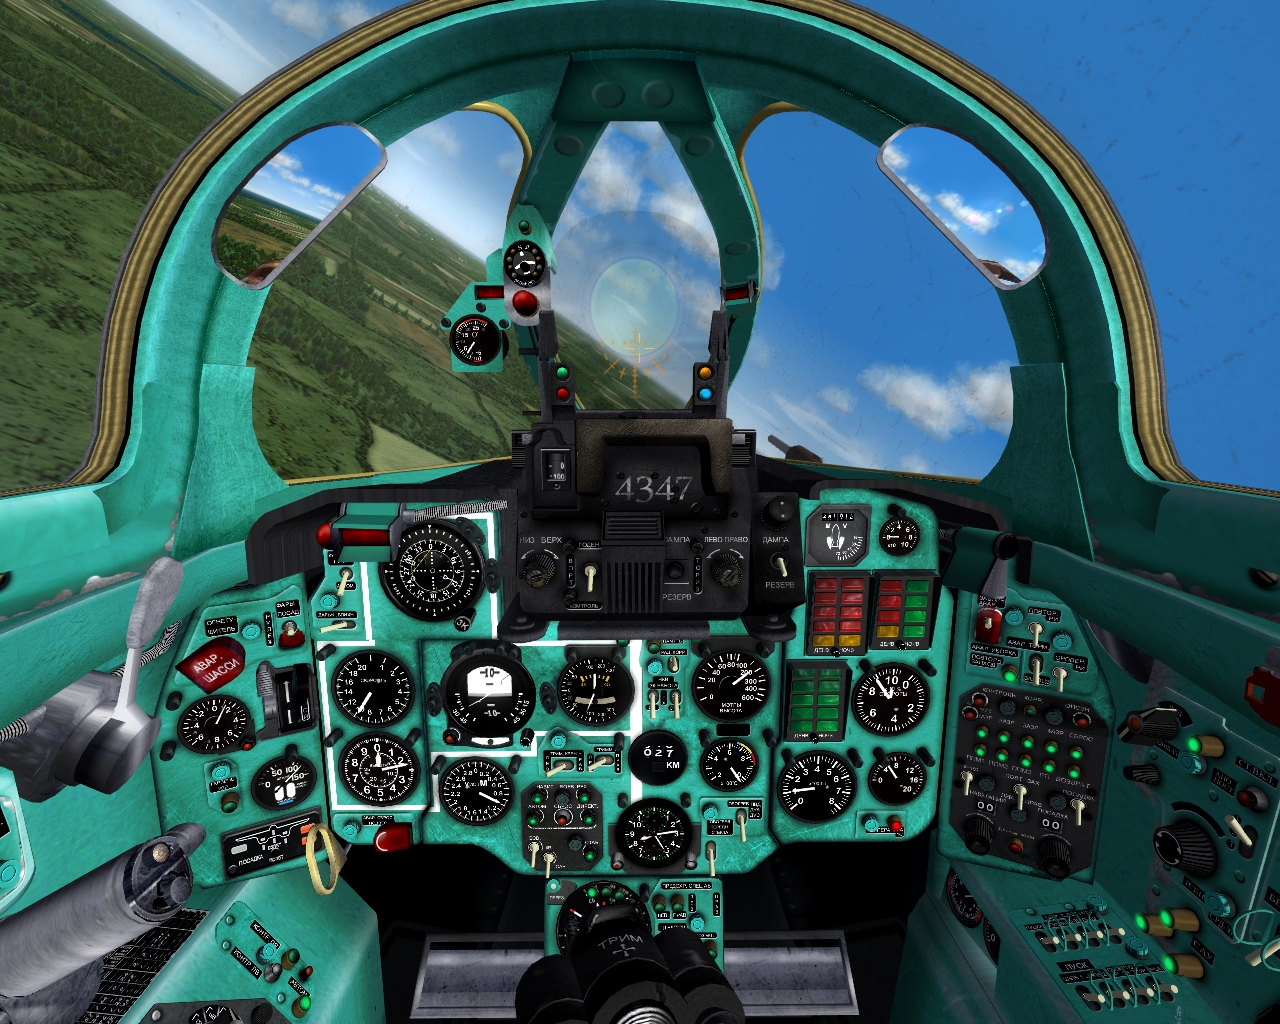 MiG-23 BN cockpit